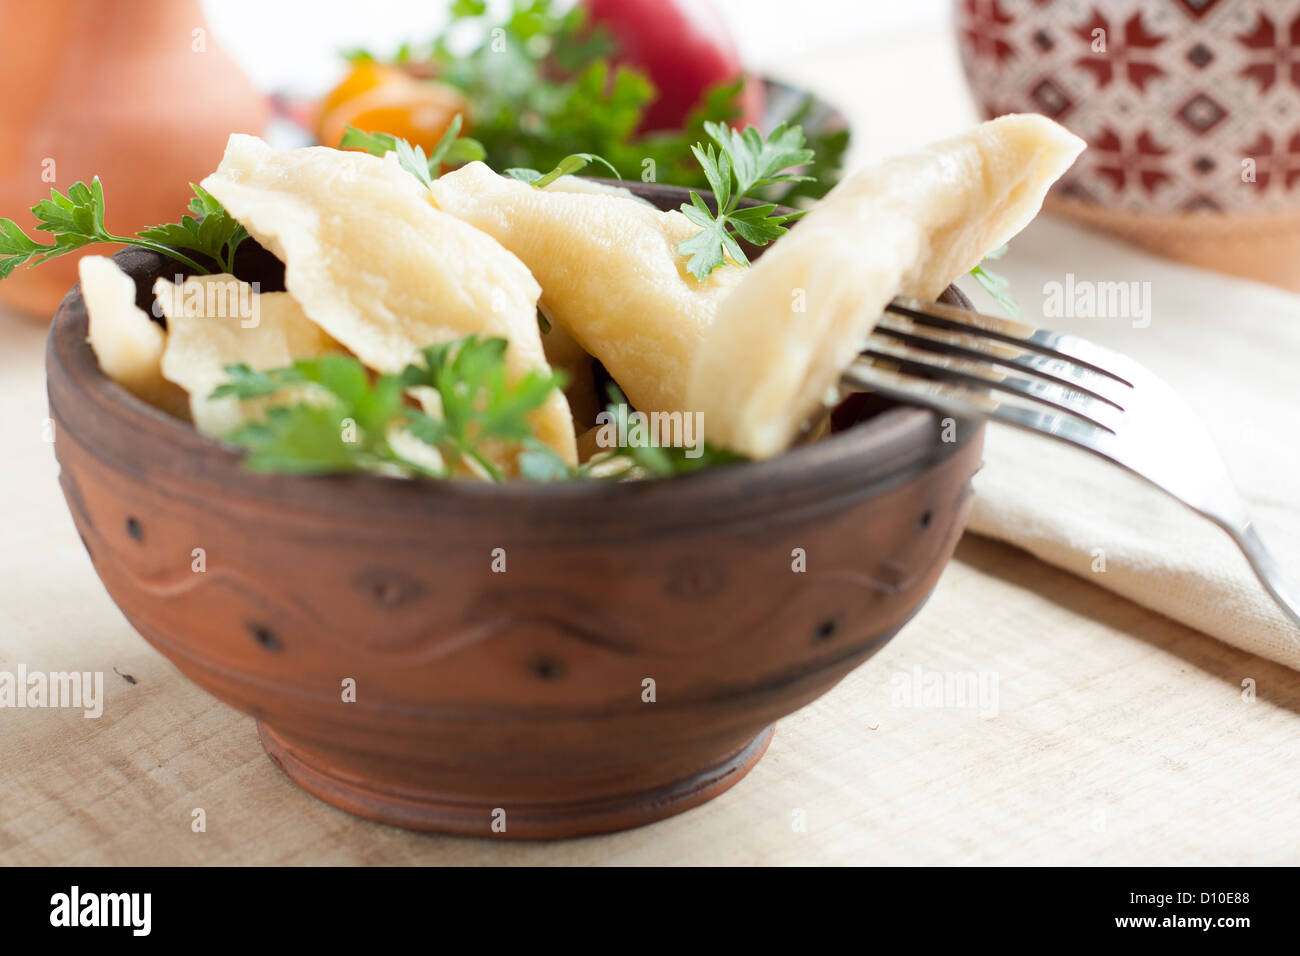 delicious Ukrainian dumplings in earthenware bowl, close up Stock Photo